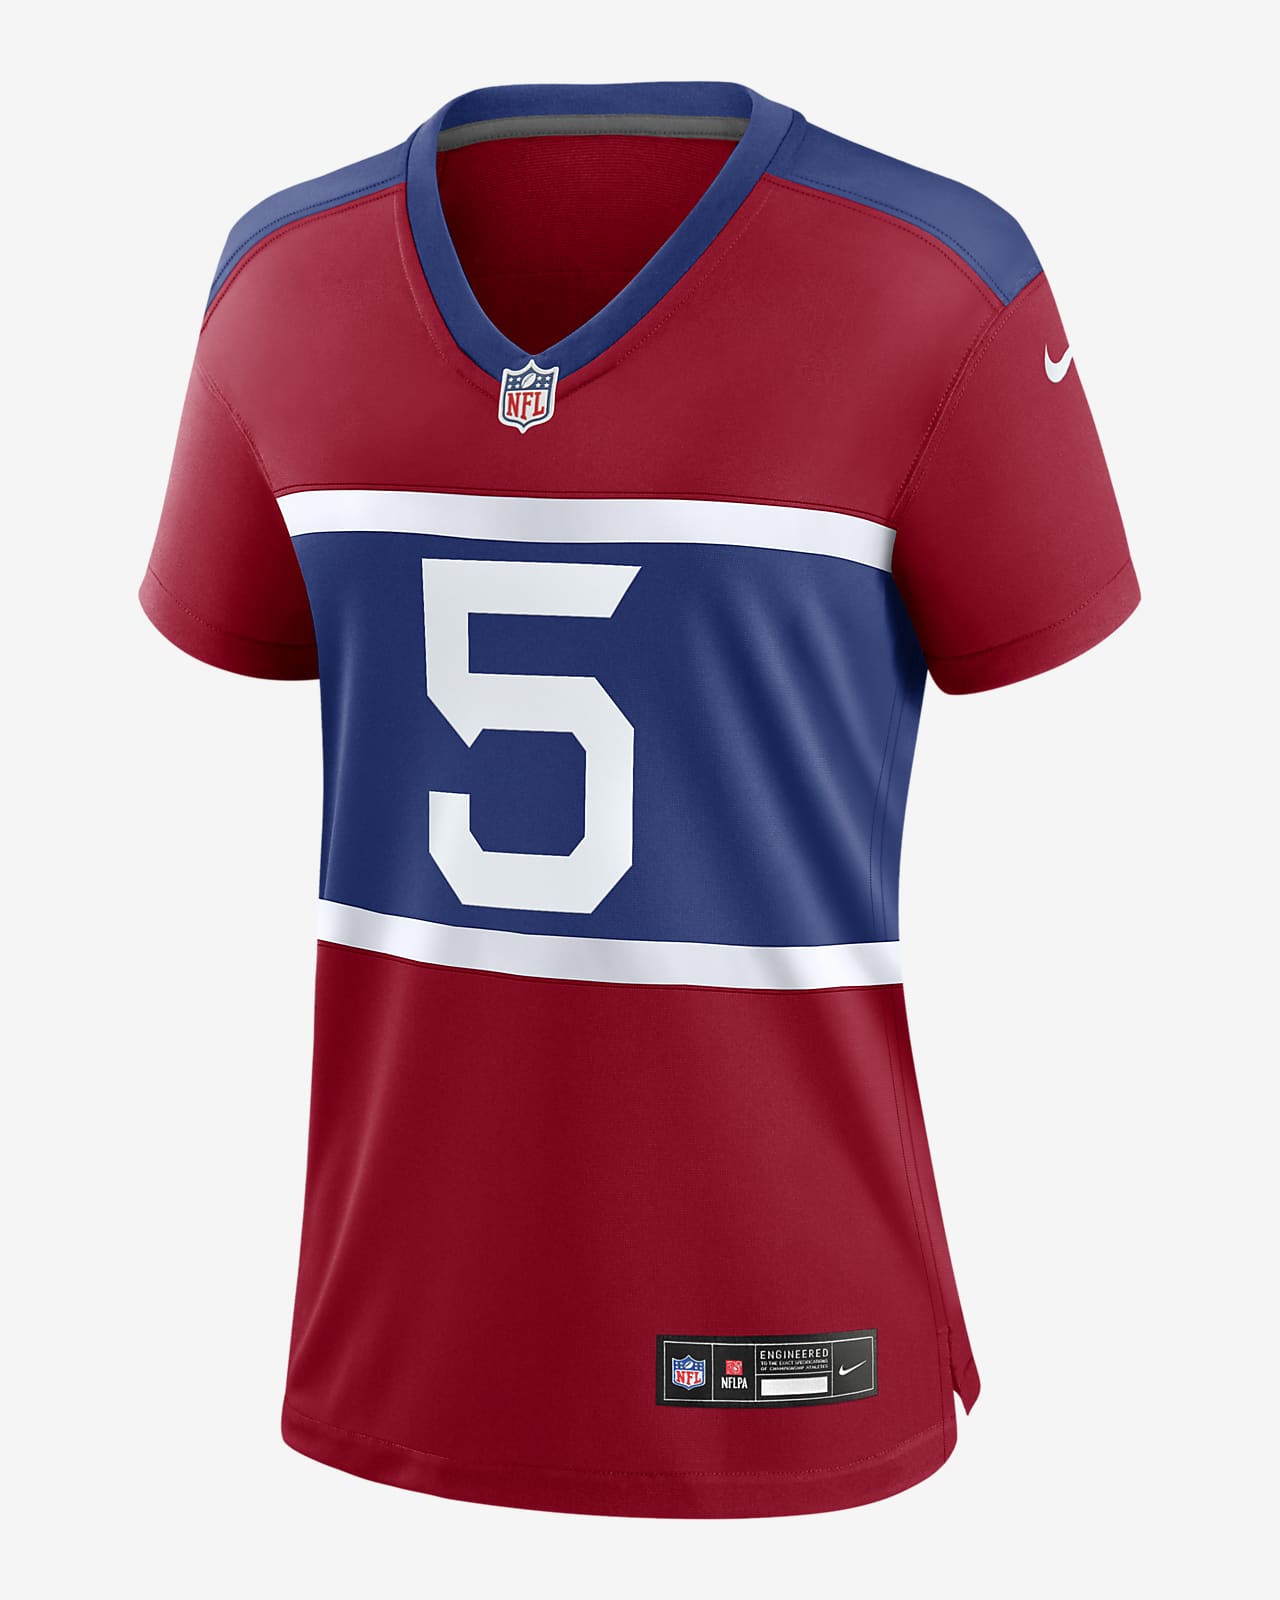 Kayvon Thibodeaux New York Giants Women's Nike NFL Game Football Jersey